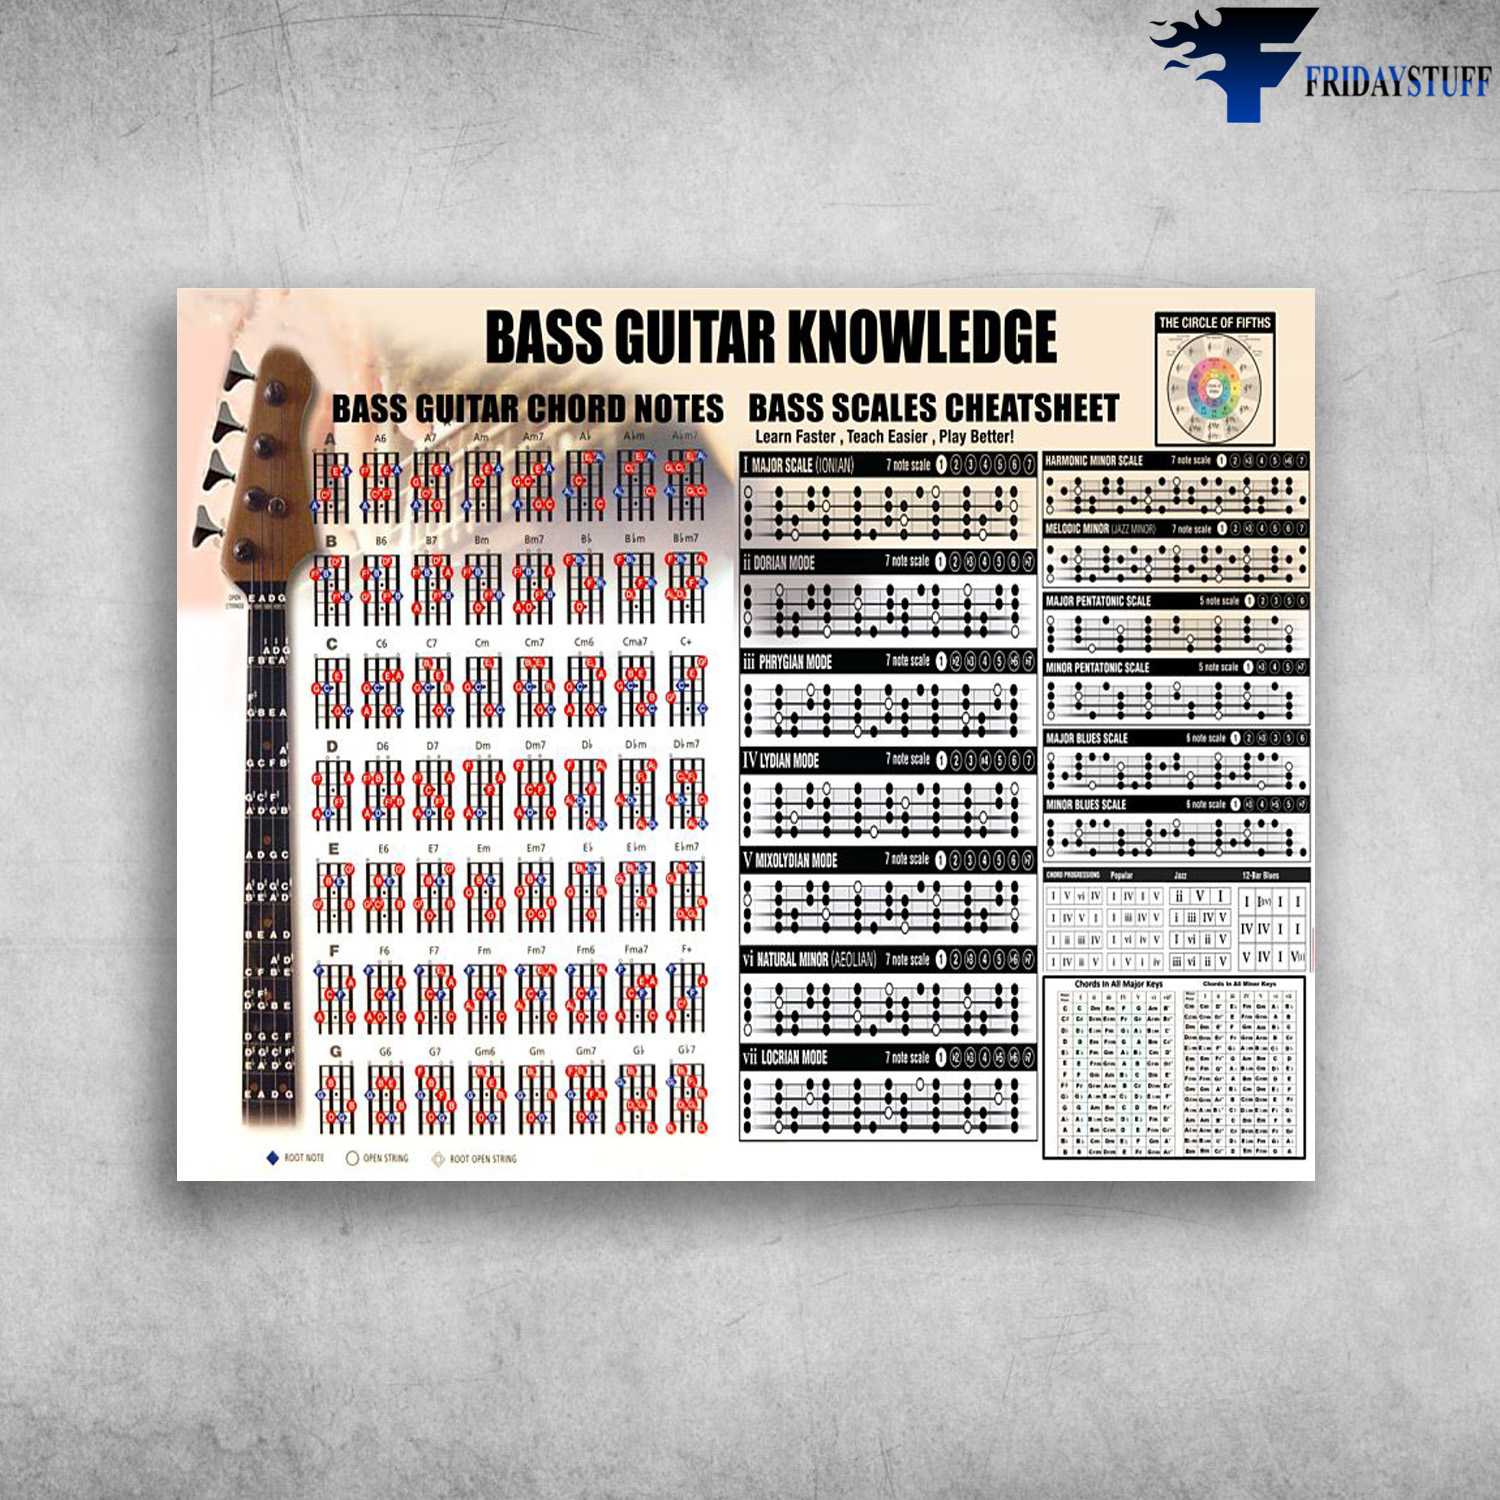 Bass Guitar Knowledge, Bass Guitar Chord Notes, Bass Scales Cheatsheet